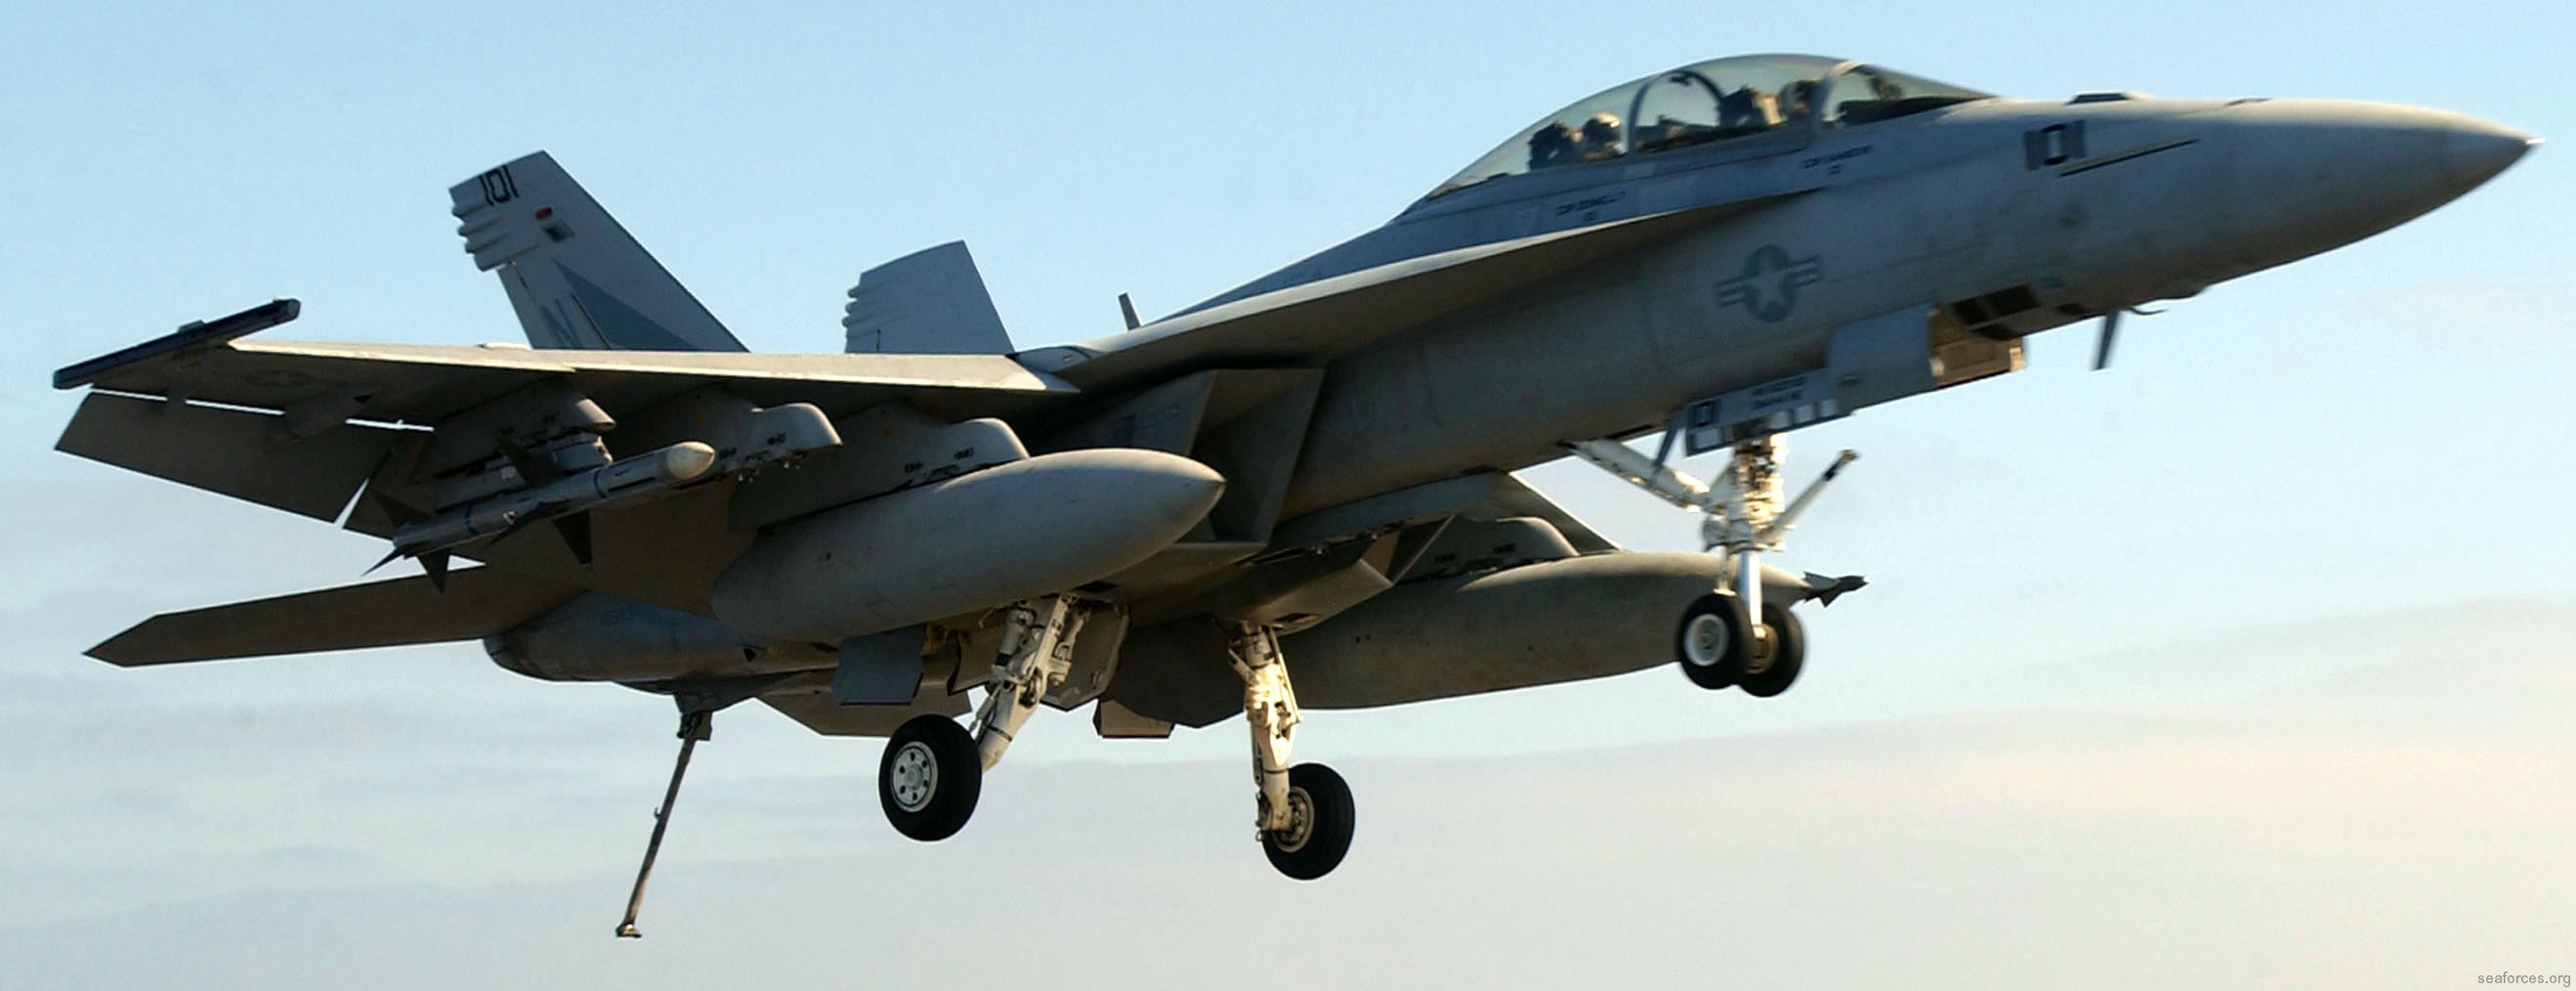 vfa-154 black knights strike fighter squadron navy f/a-18f super hornet carrier air wing cvw-9 uss john c. stennis cvn-70 125